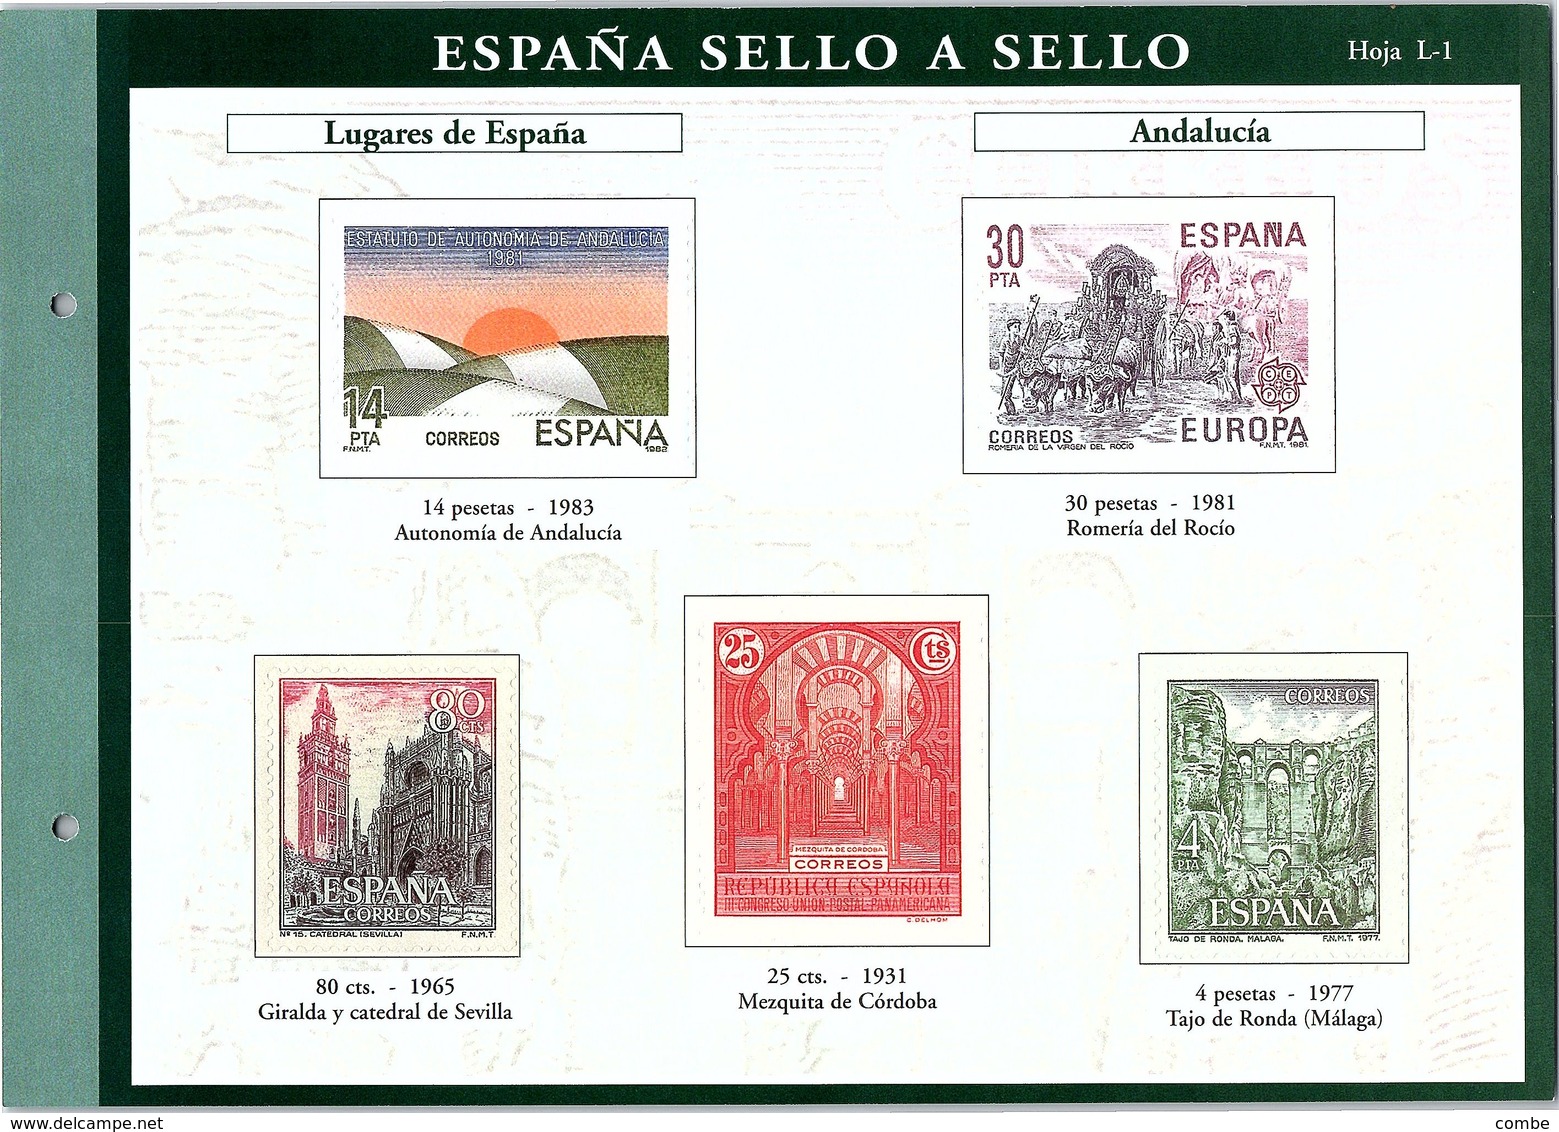 SPAÑA SELLO A SELLO. COLECCIÓN LIMITADA Y NUMERADA. Hoja L-1  LUGARES DE ESPANA ANDALUCIA - Proofs & Reprints